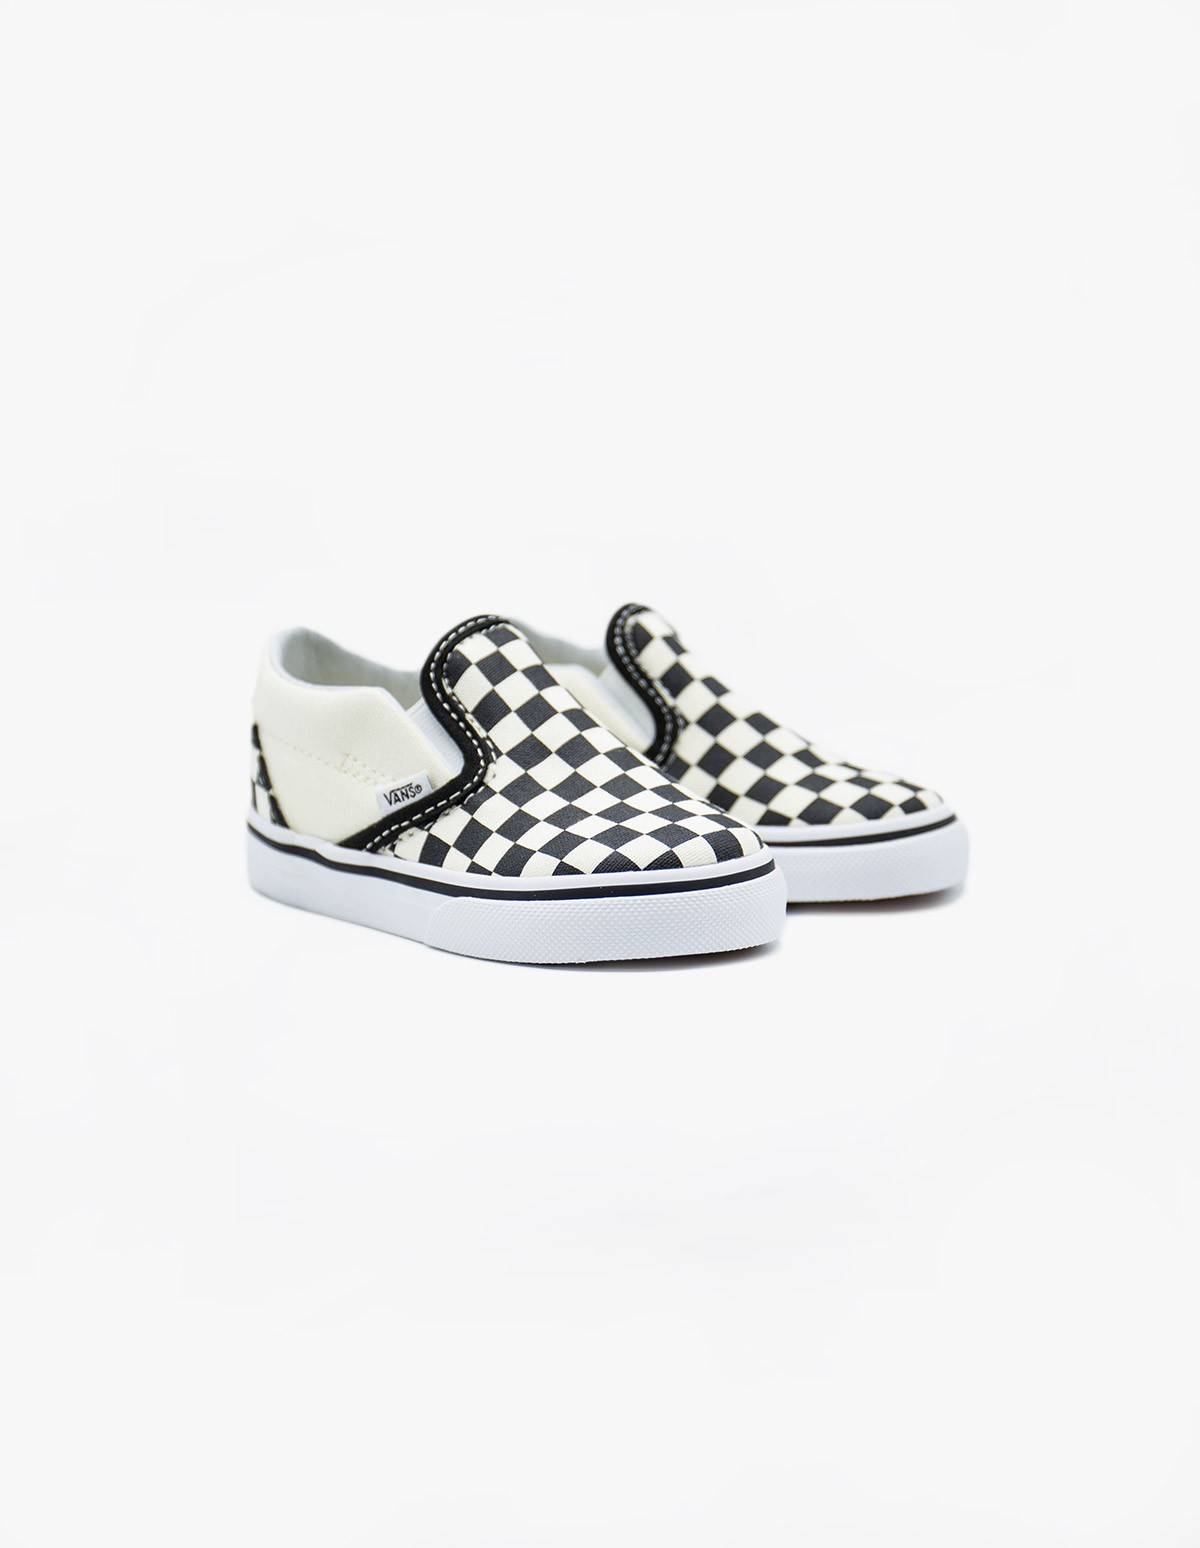 Vans Slip-On (Youth) in Black & White Checkerboard